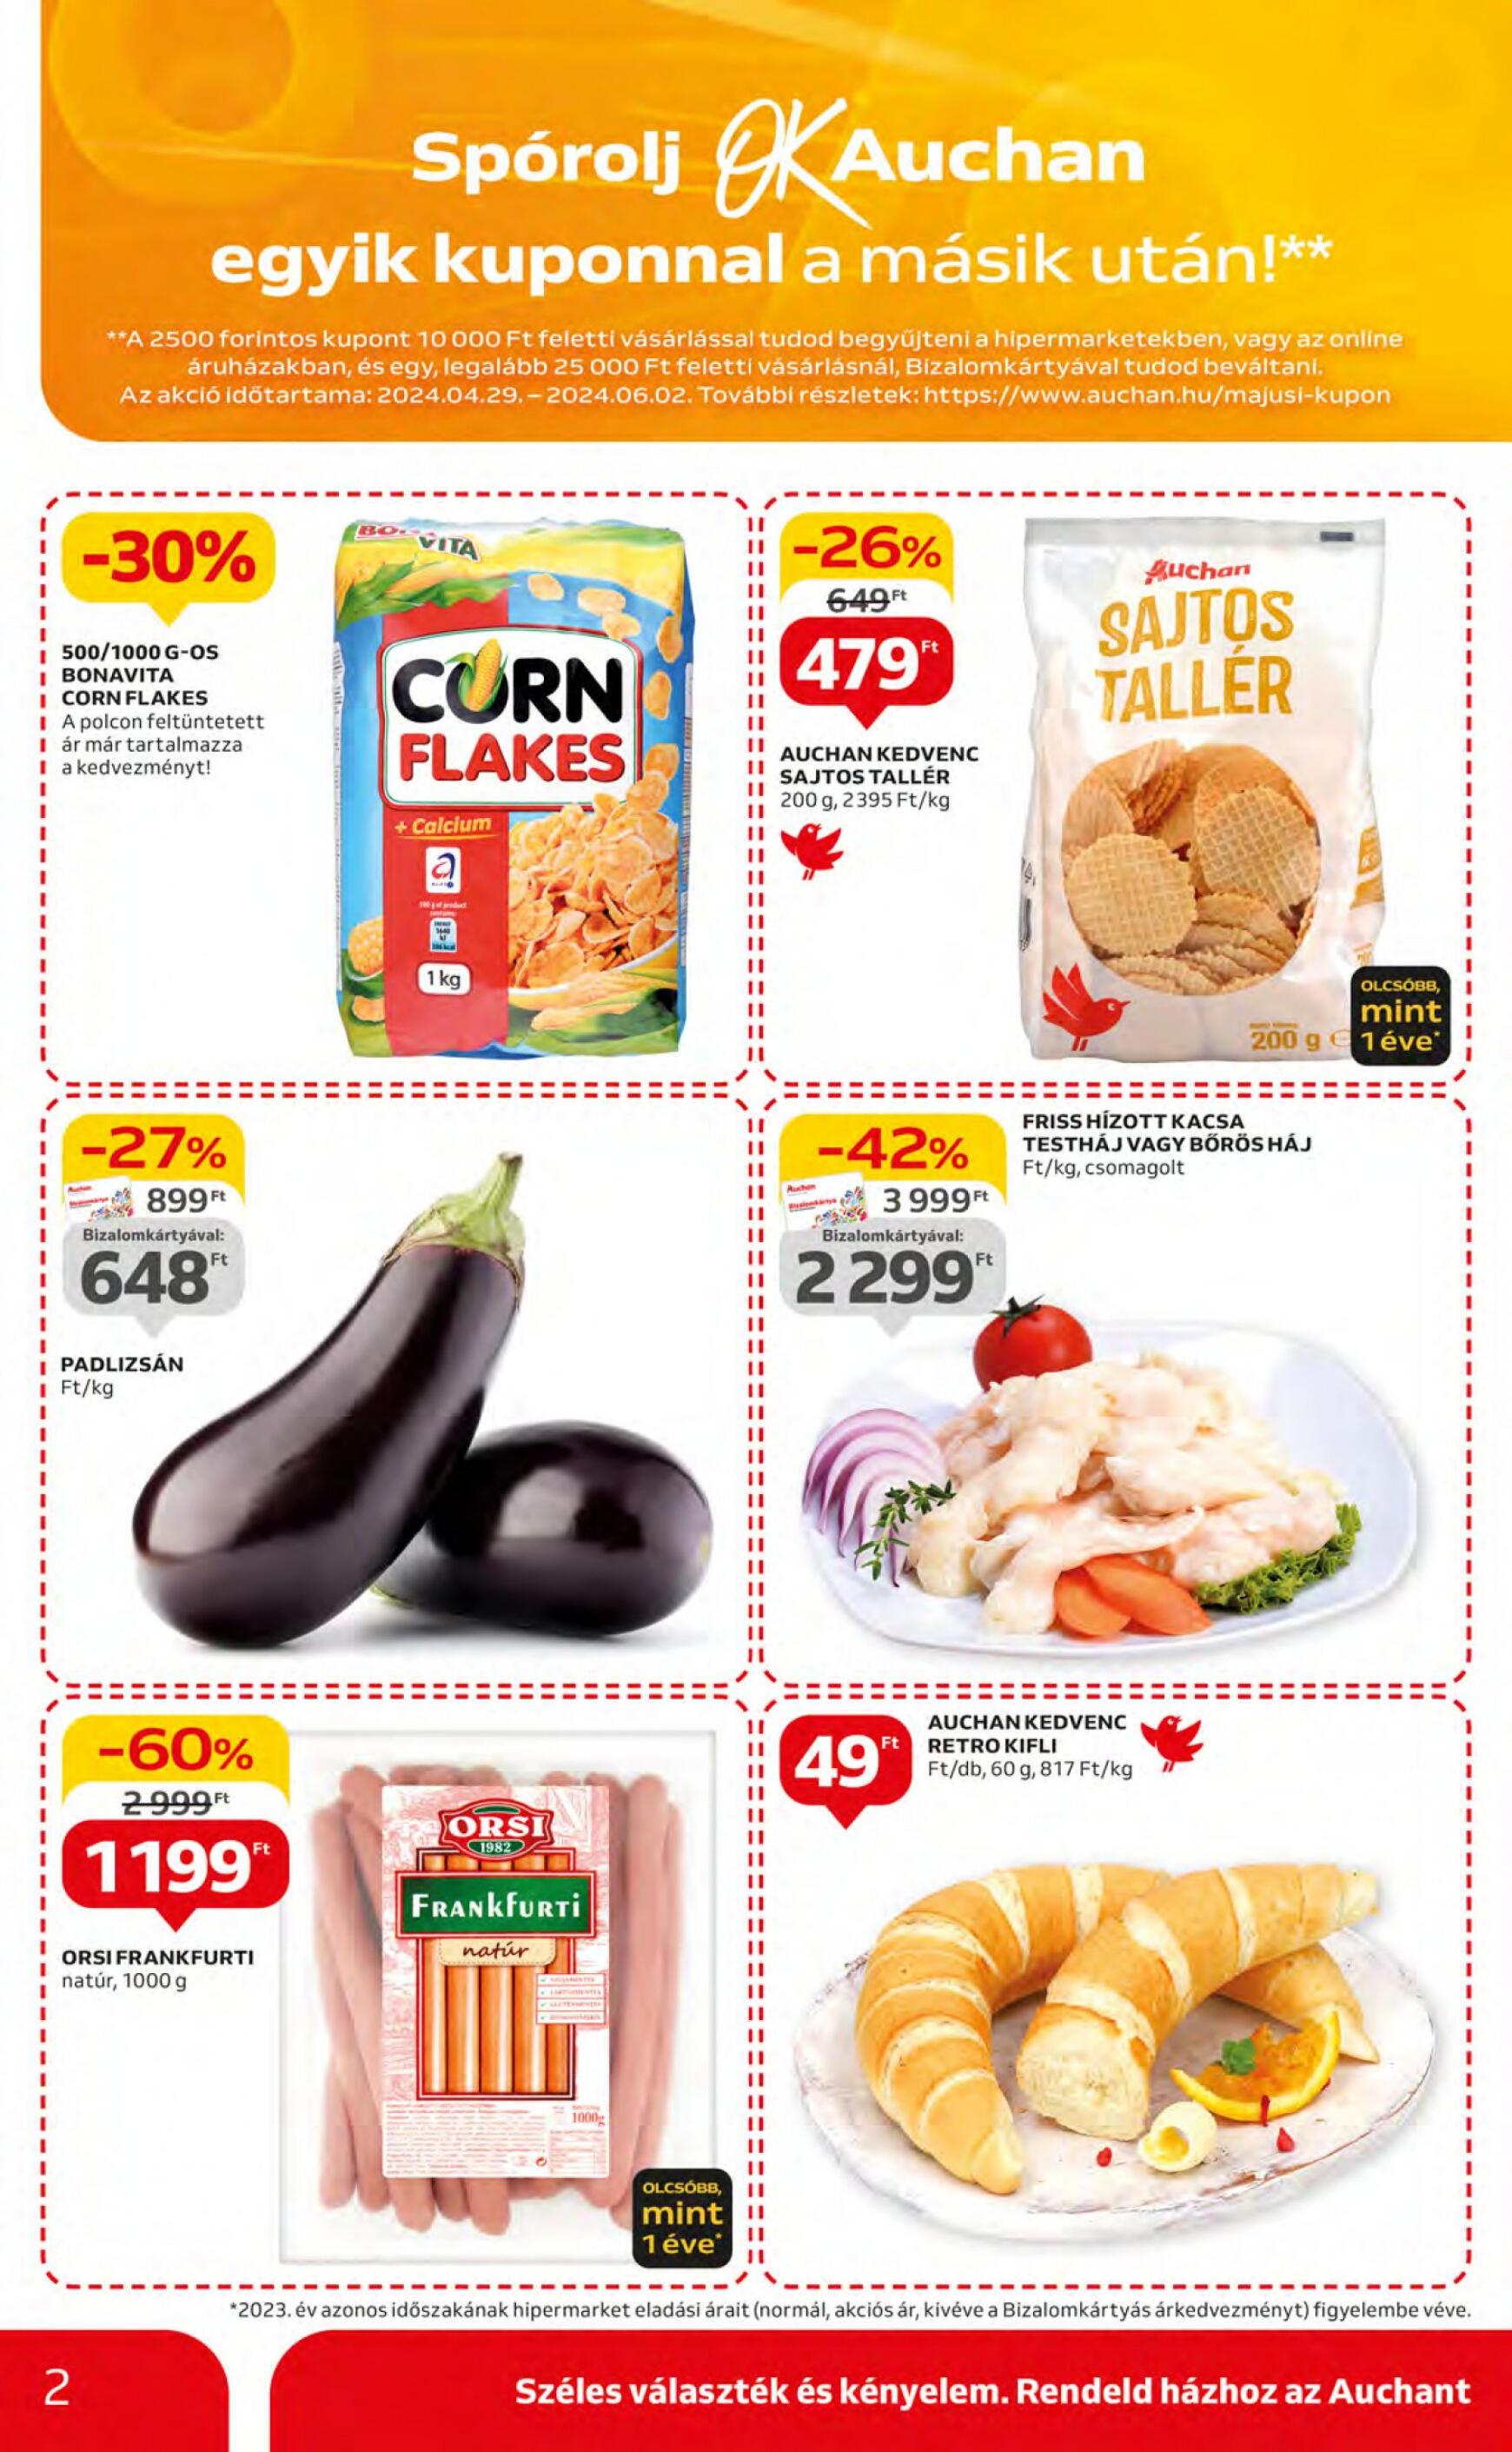 auchan - Aktuális újság Auchan 05.09. - 05.15. - page: 2